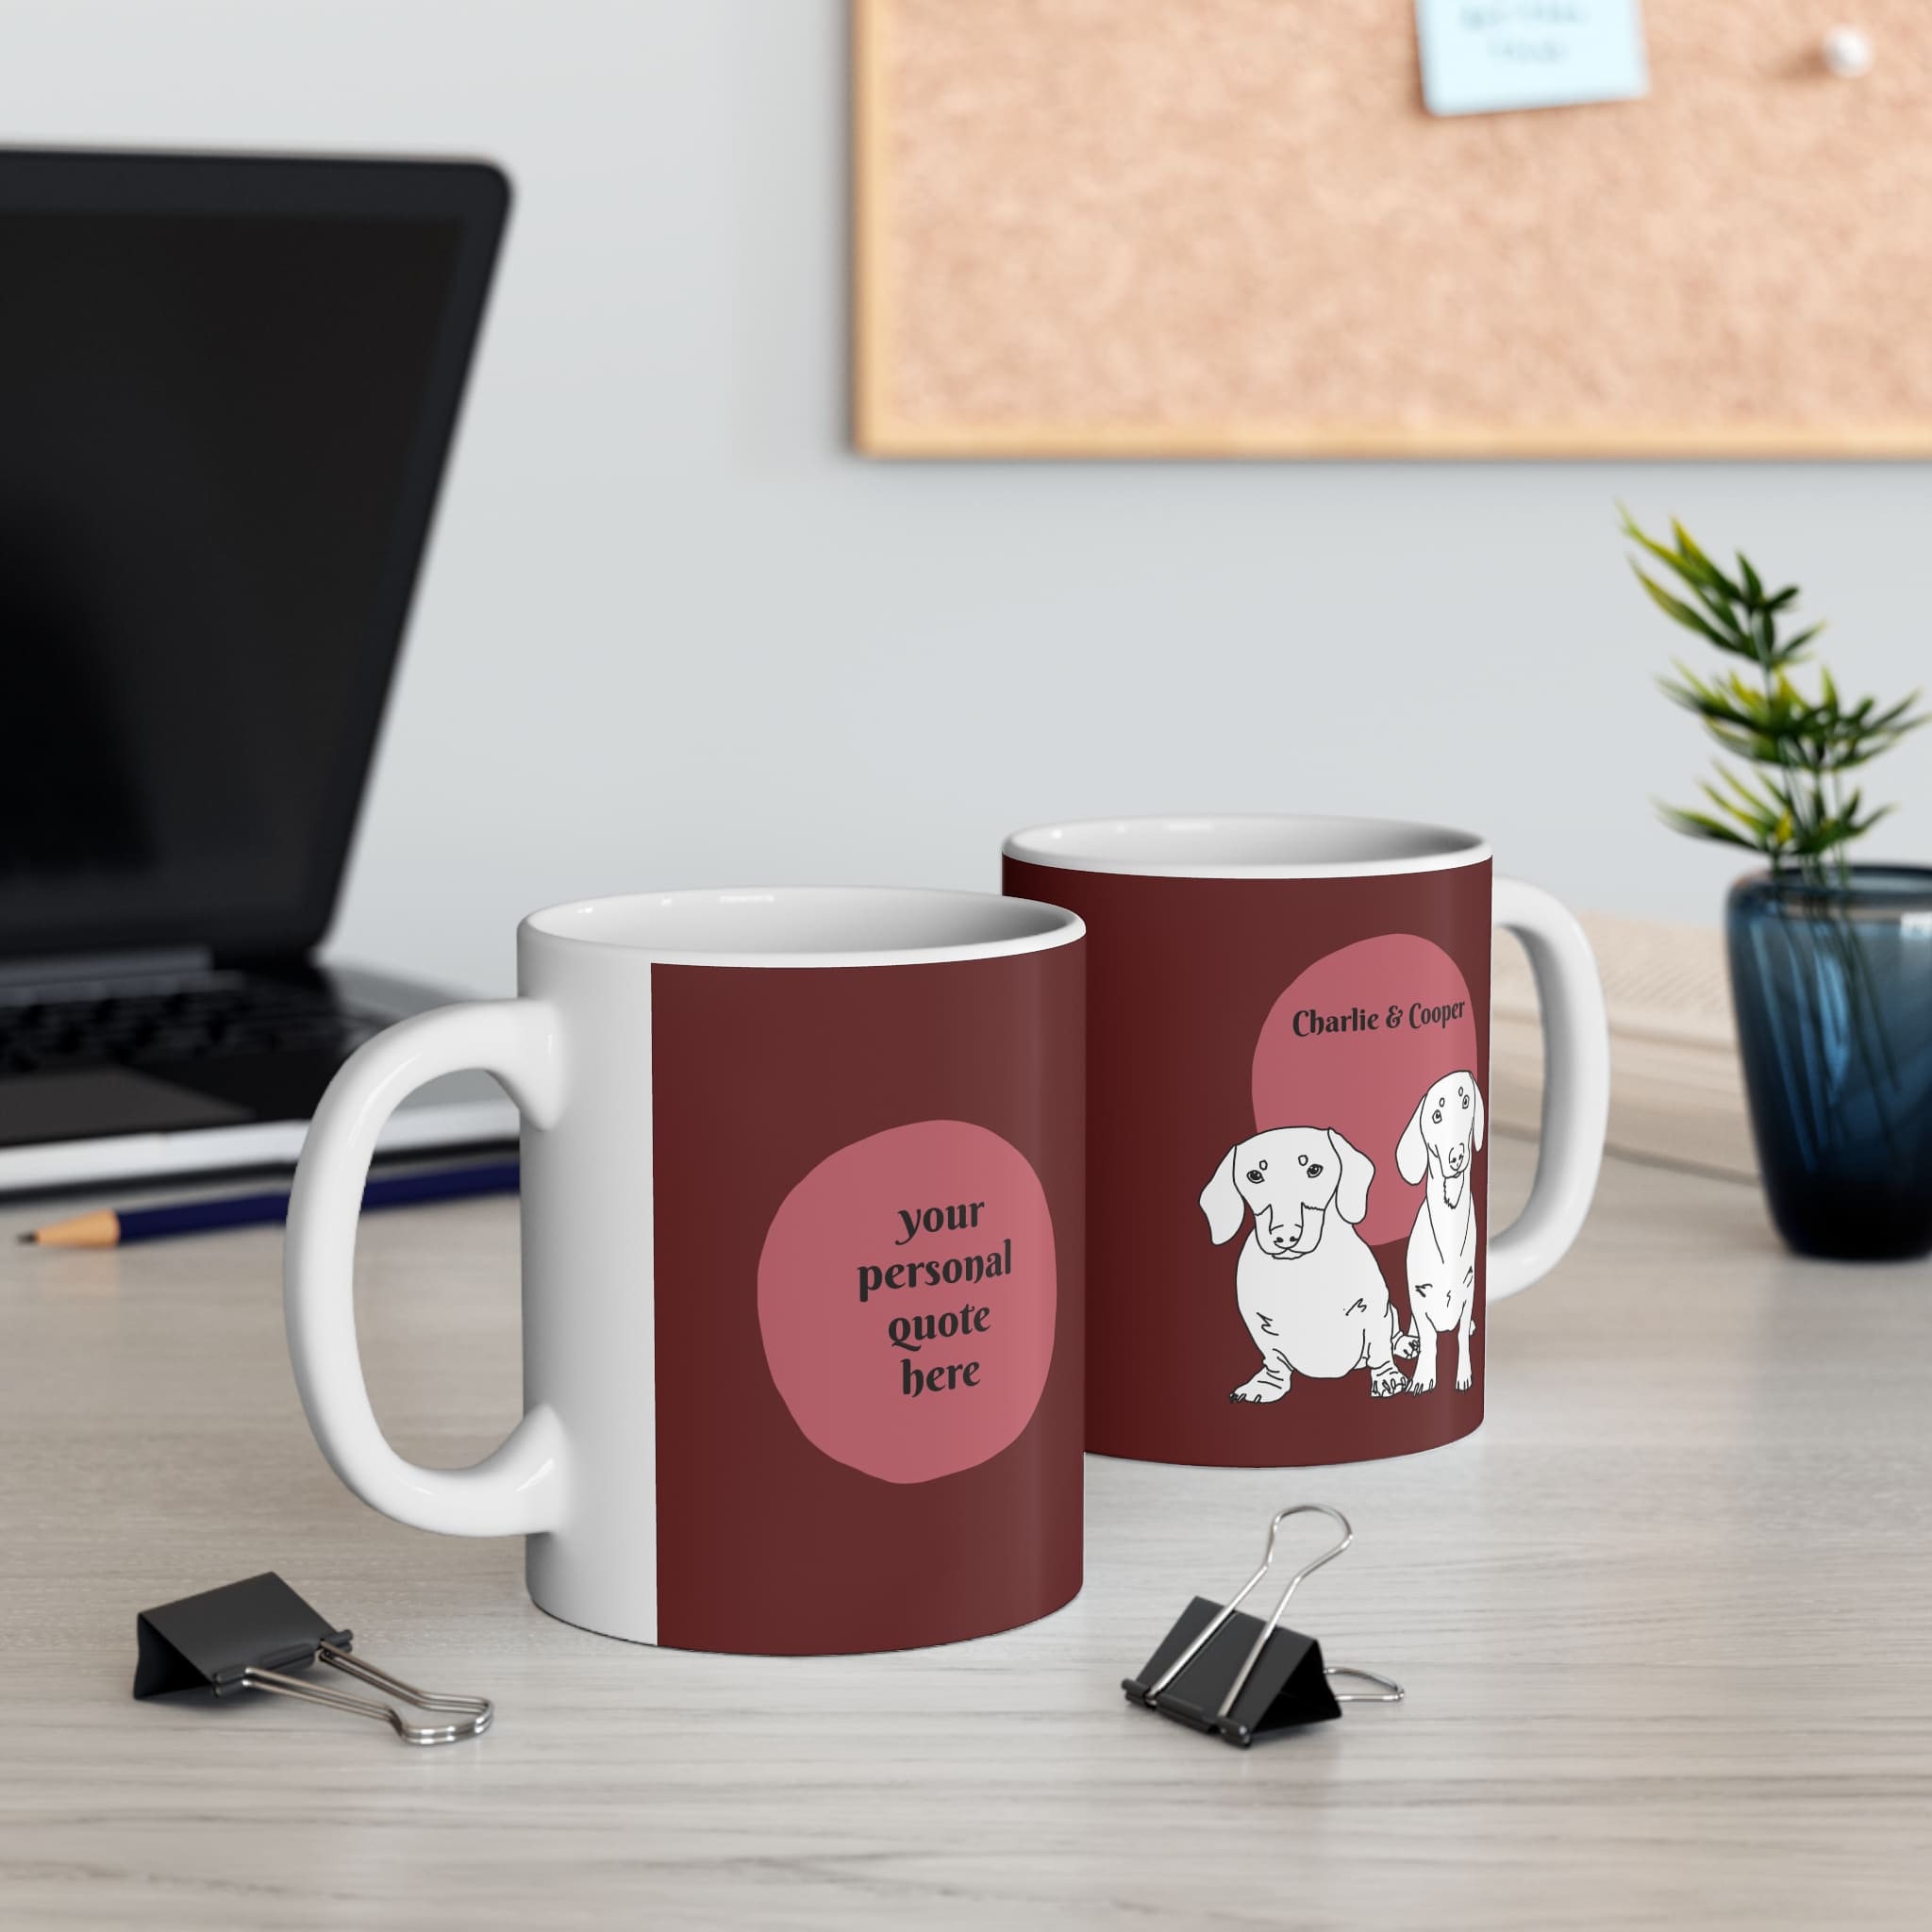 custom fashion mug withh dogs line portrait illustration on color blocking berry back ground